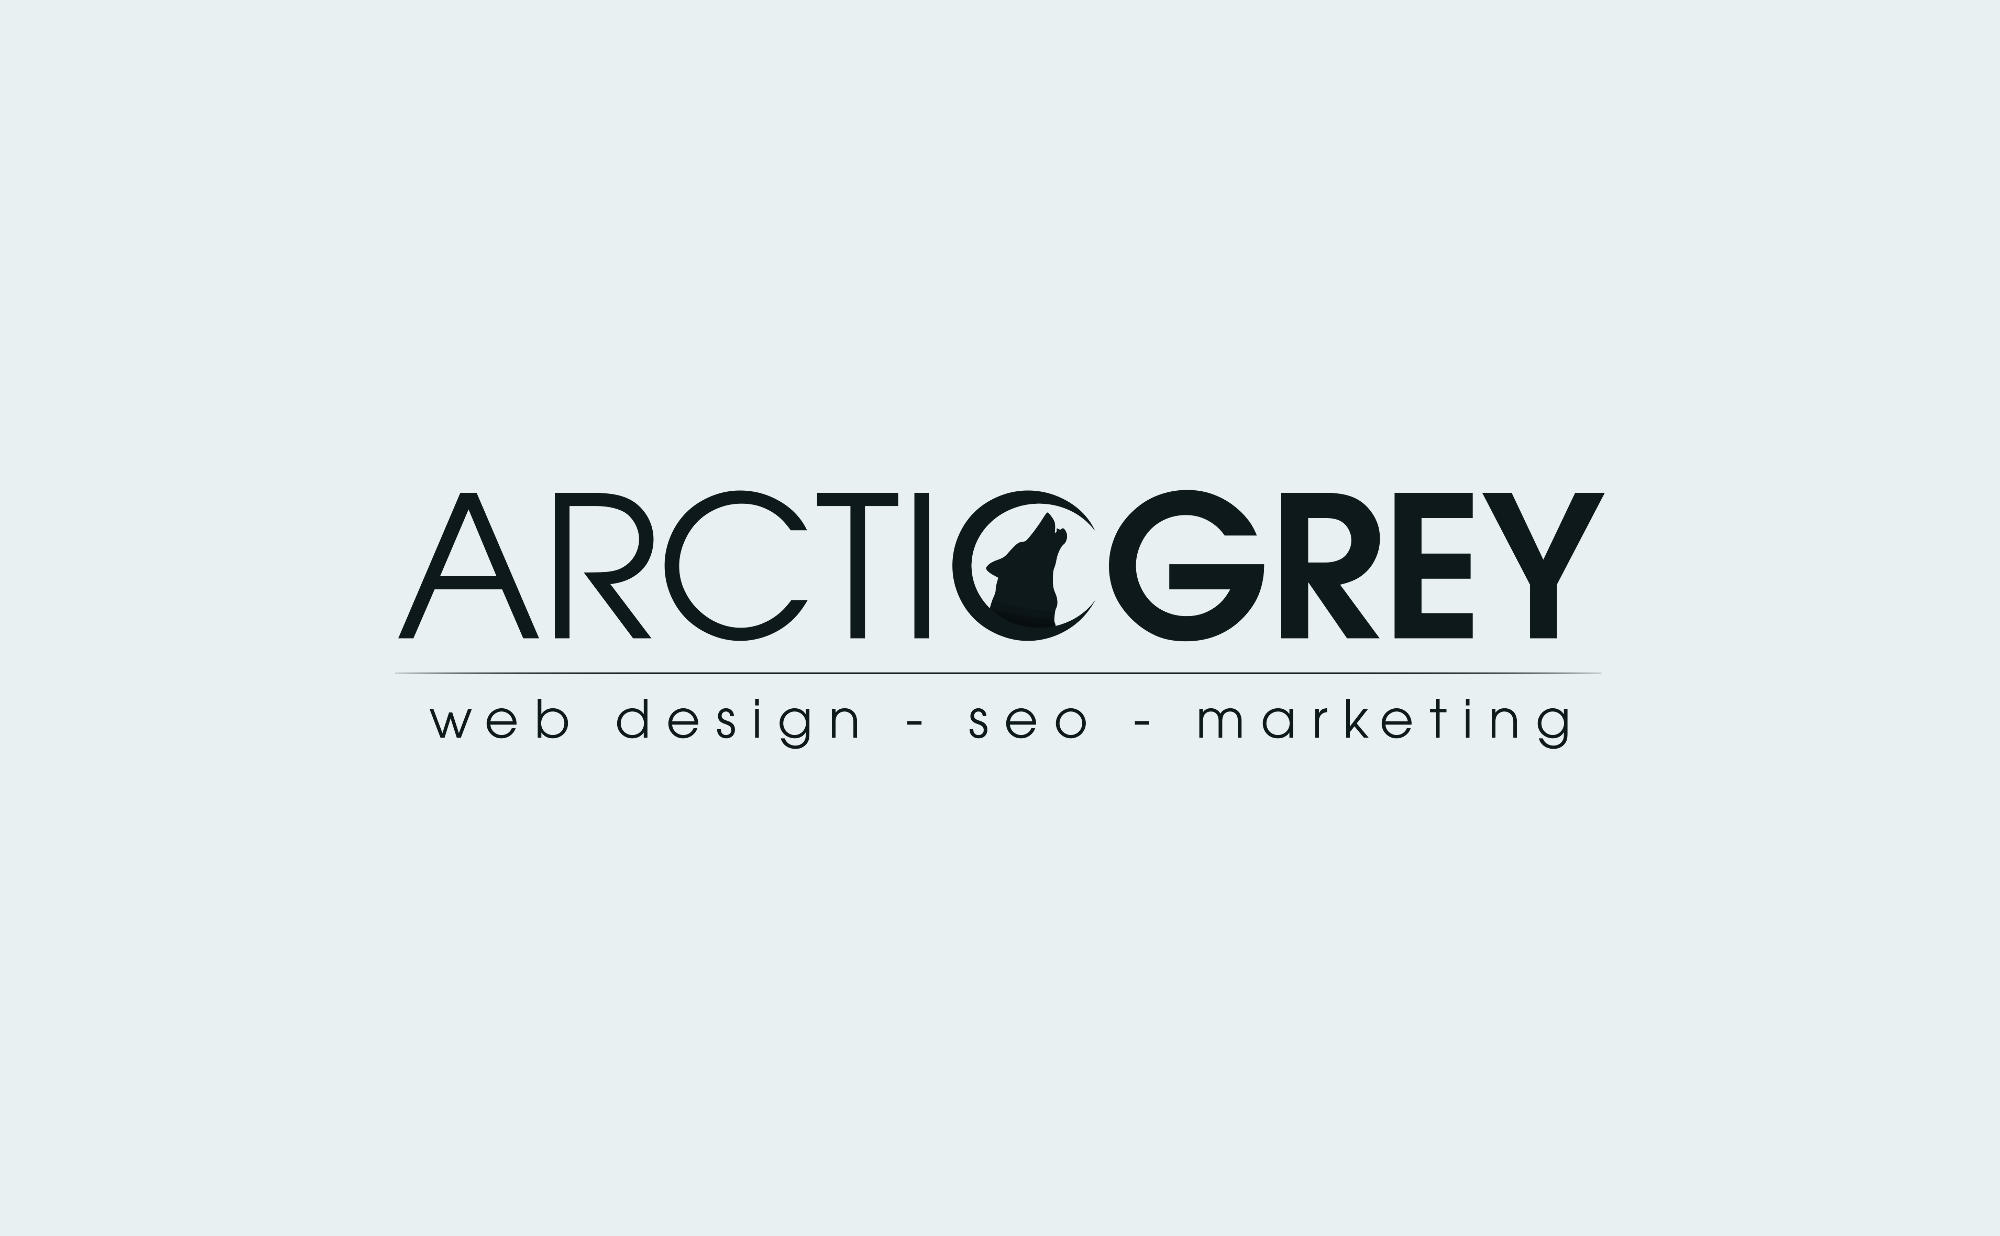 Top SEO Website Development Business Logo: Arctic Grey Inc